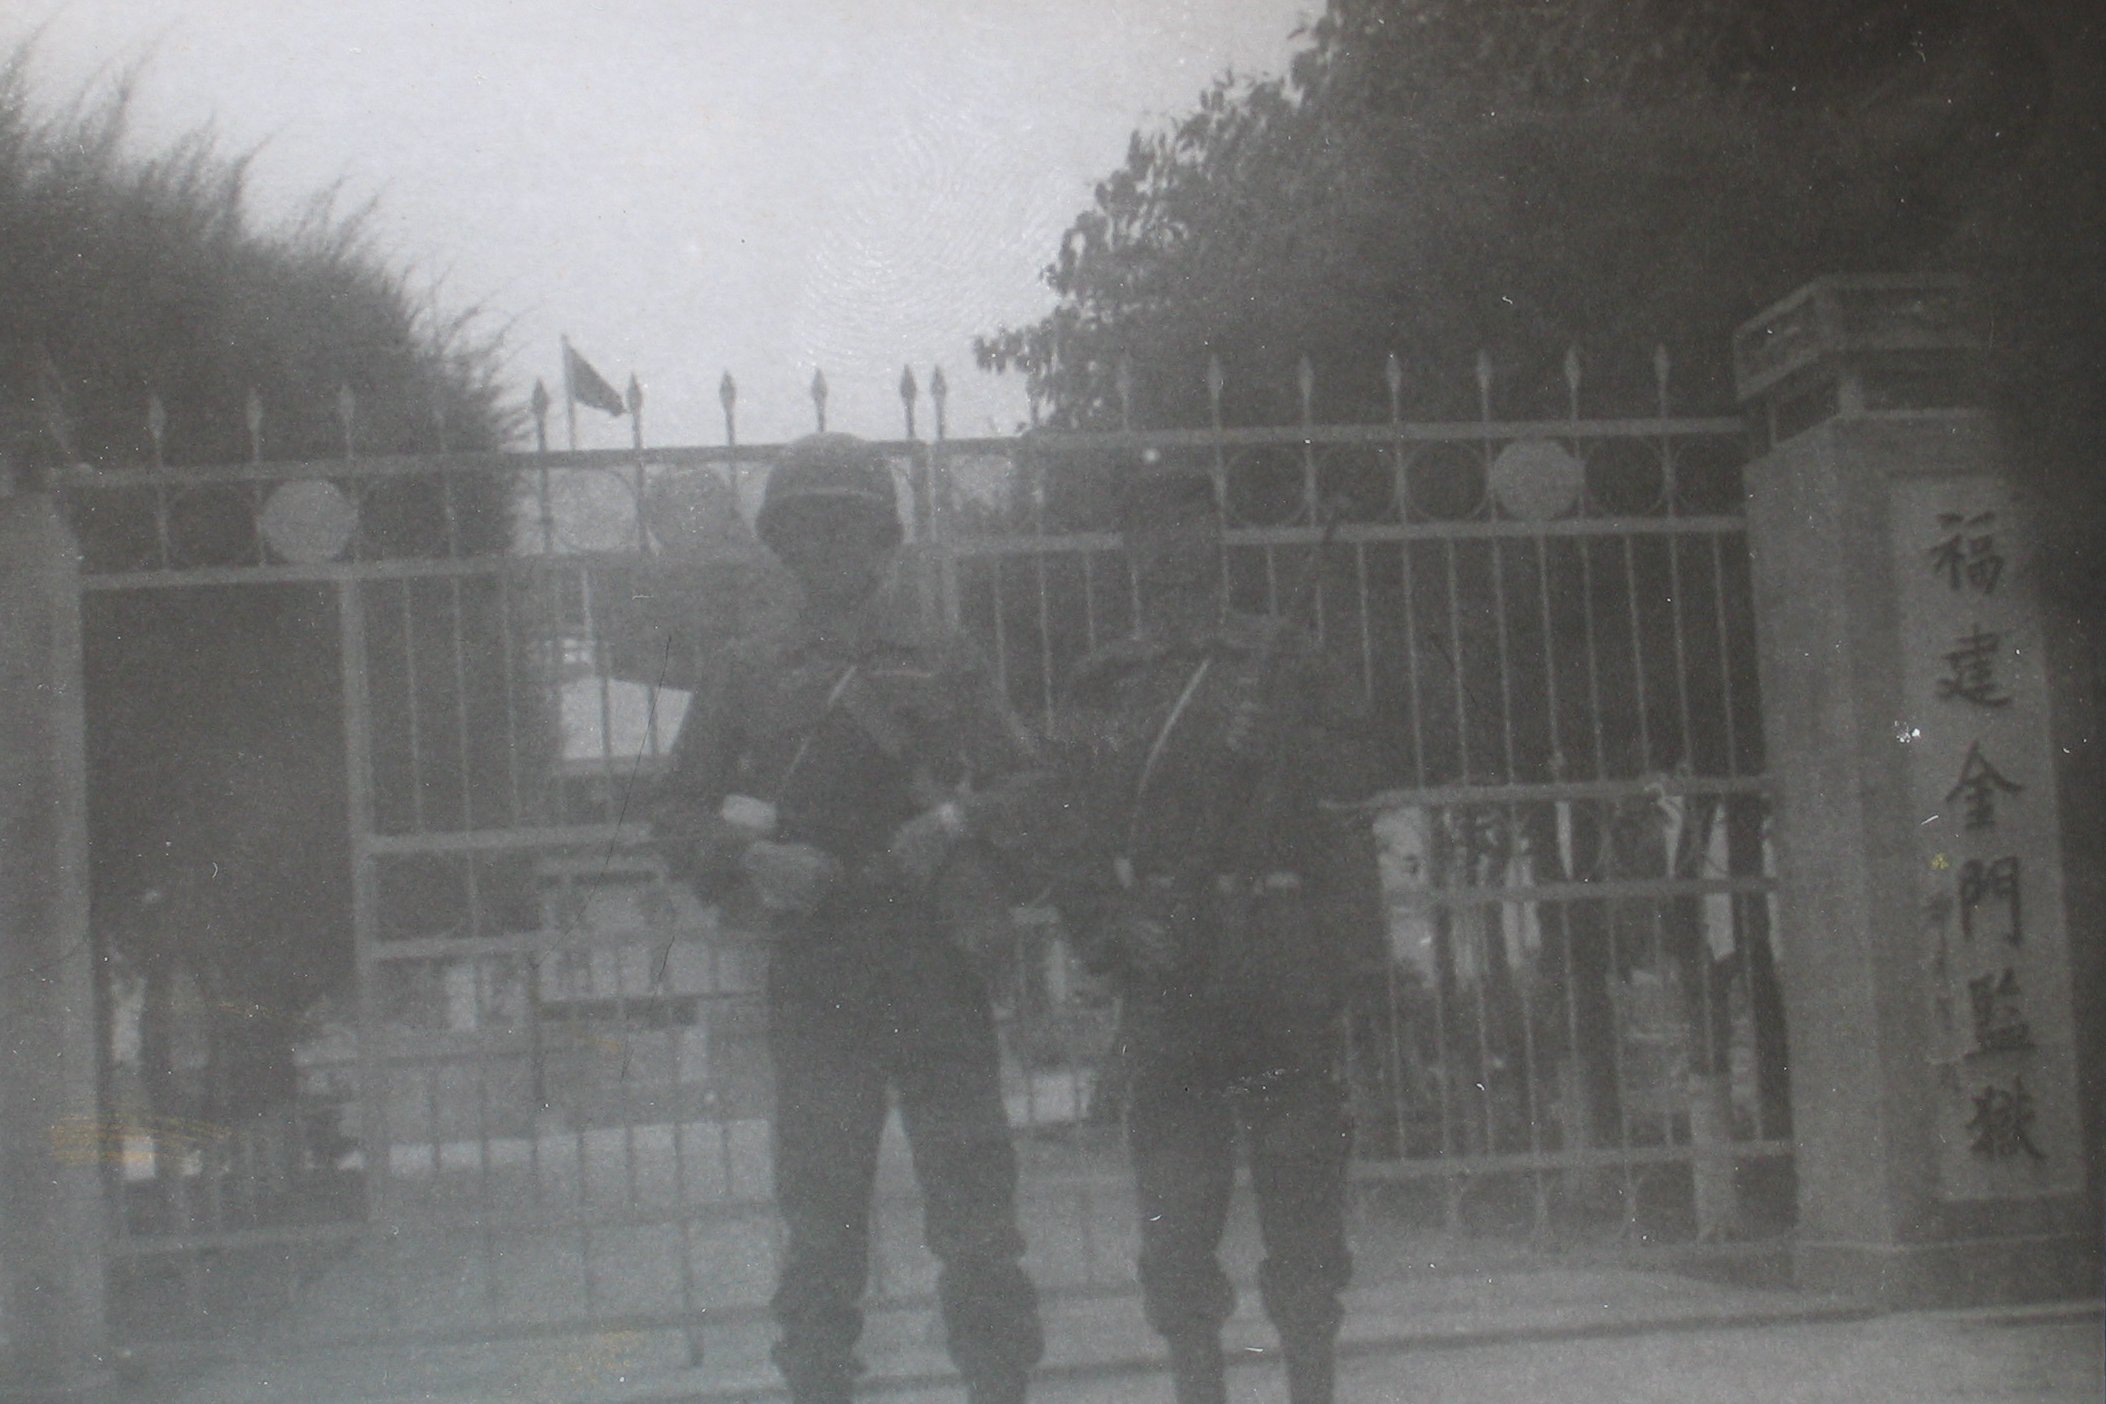 Picture of the Main Gate of the Kinmen Prison in 1951